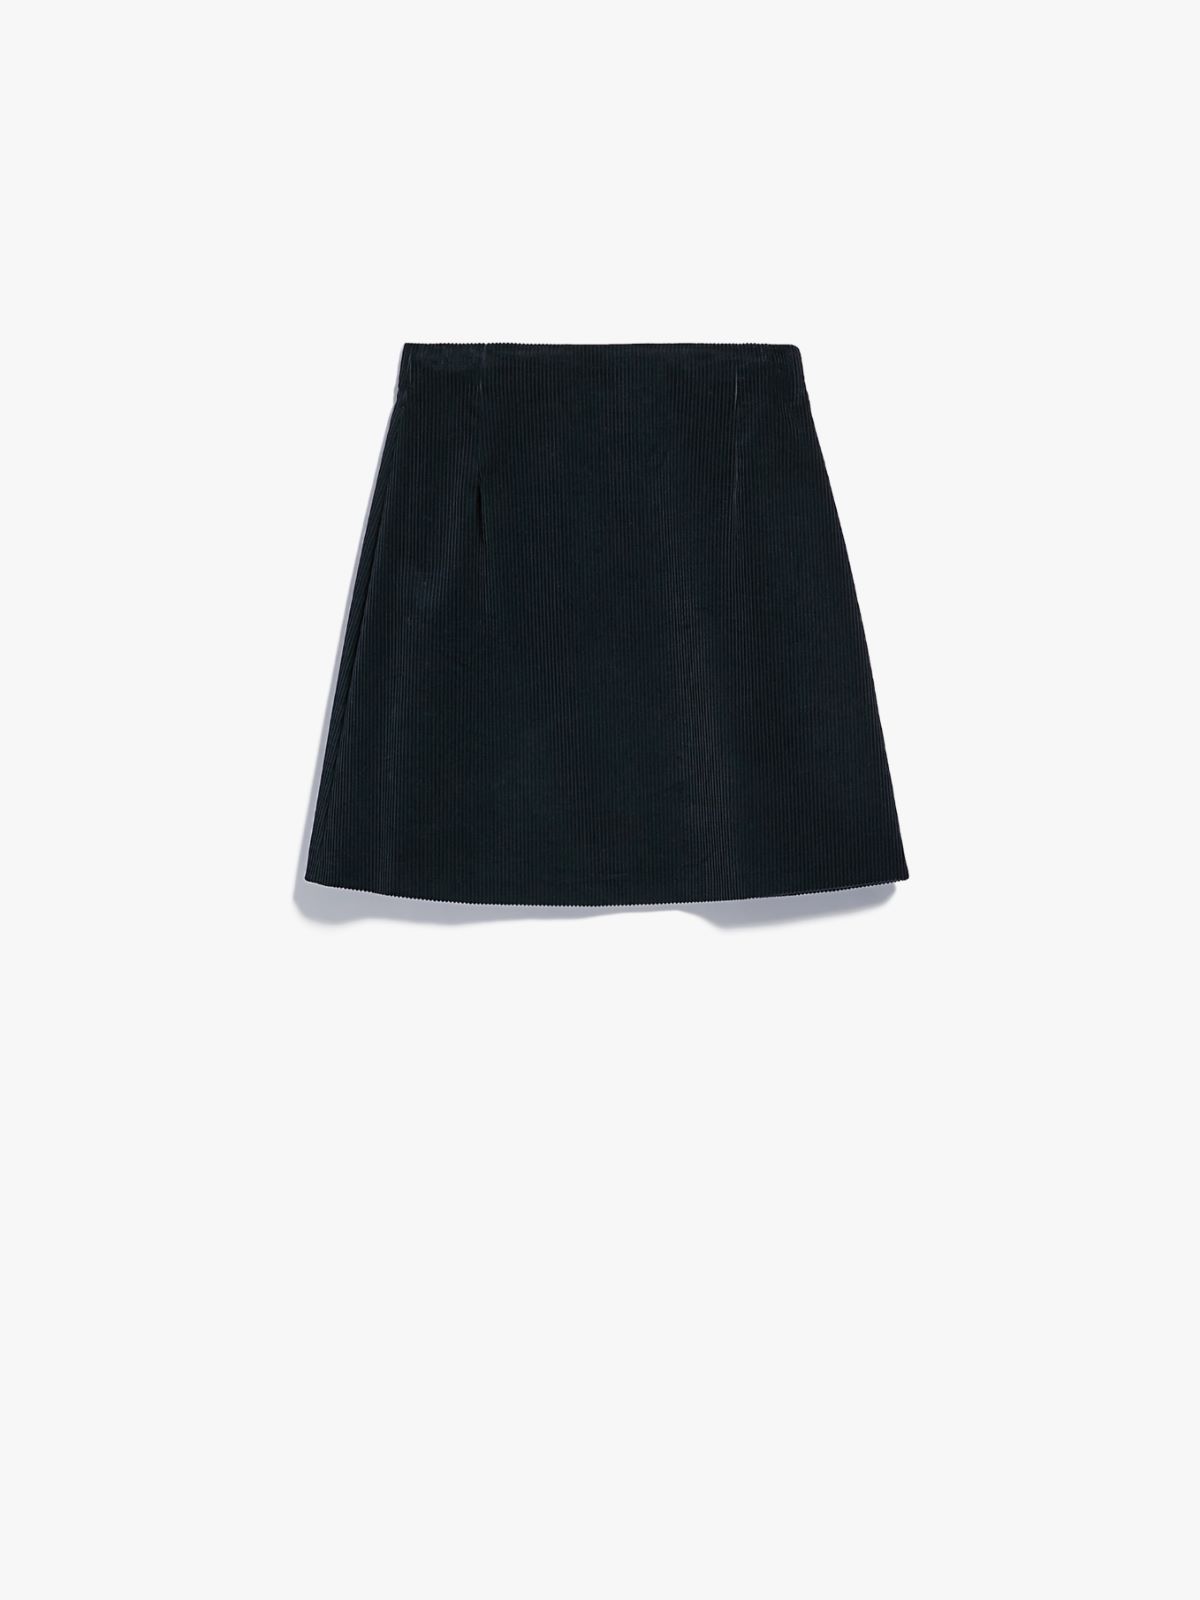 Cotton velvet skirt - NAVY - Weekend Max Mara - 5